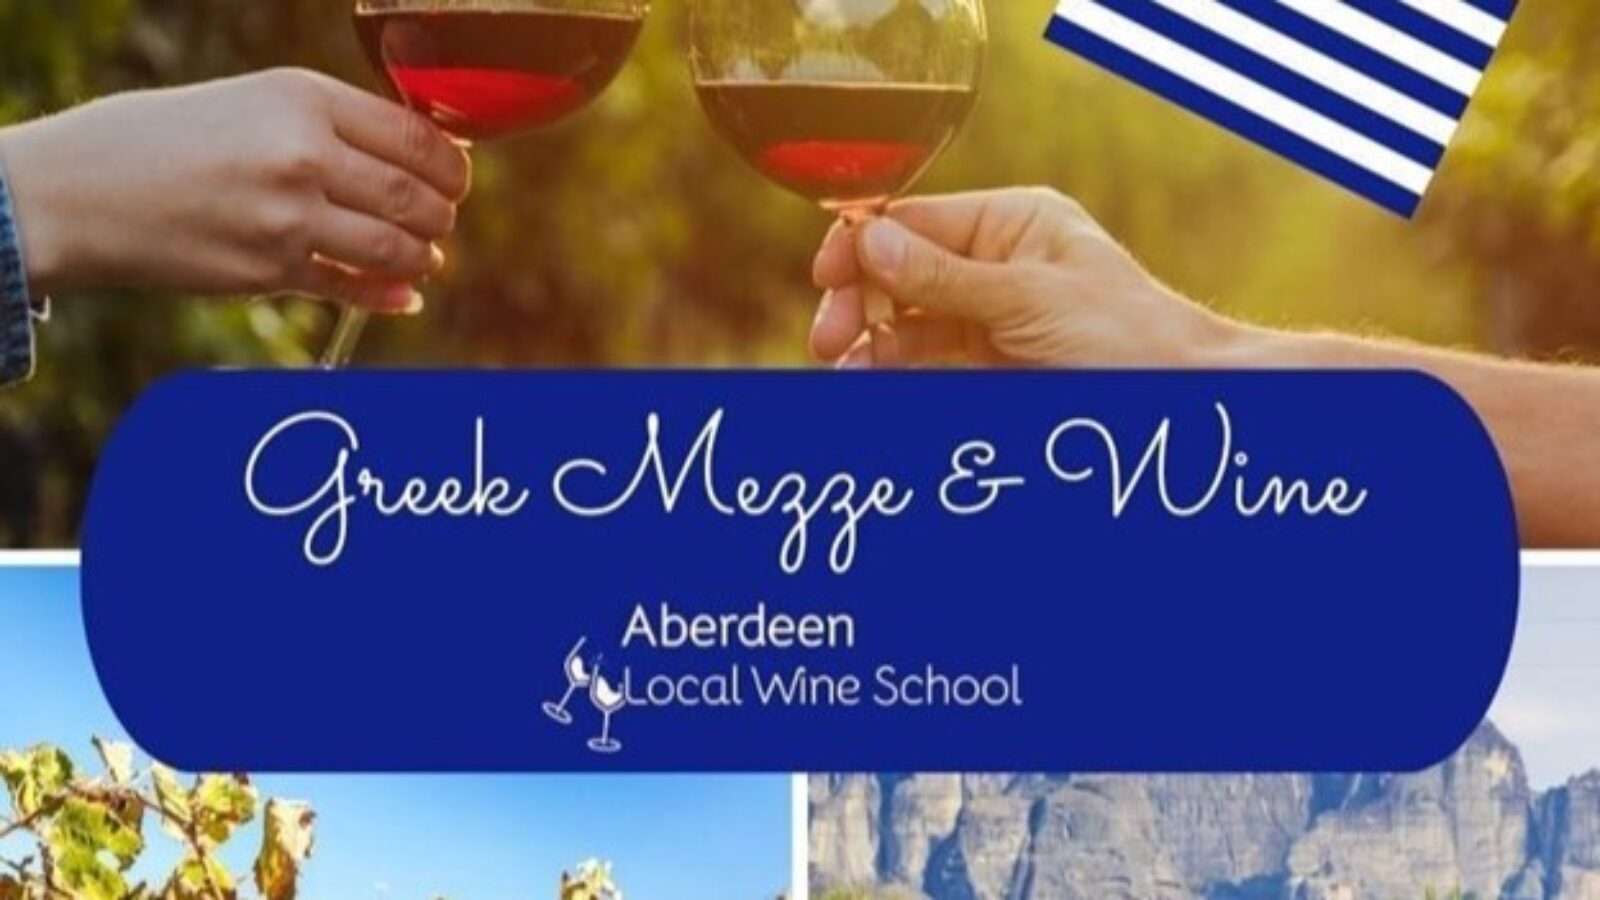 Aberdeen Local Wine School announce a Greek-inspired event